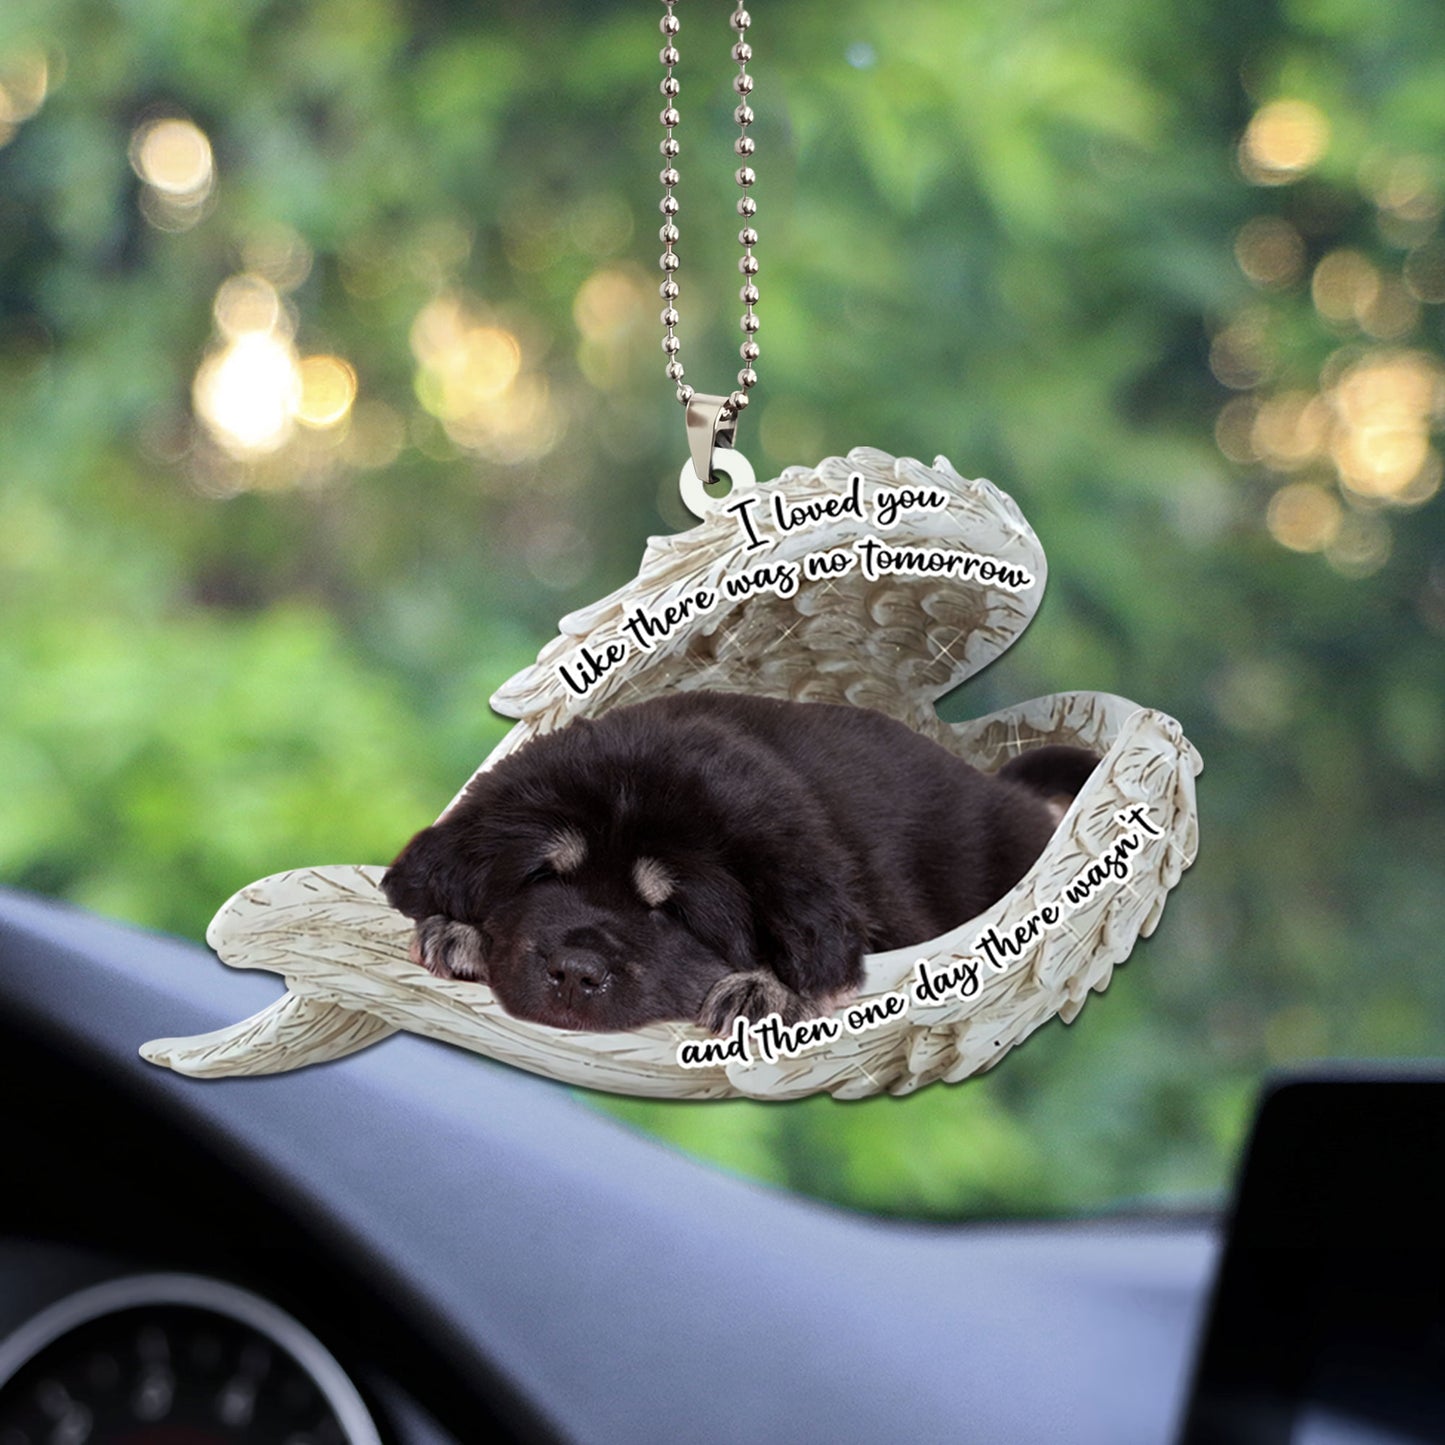 Tibetan Mastiff Sleeping Angel Dog Personalizedwitch Flat Car Memorial Ornament